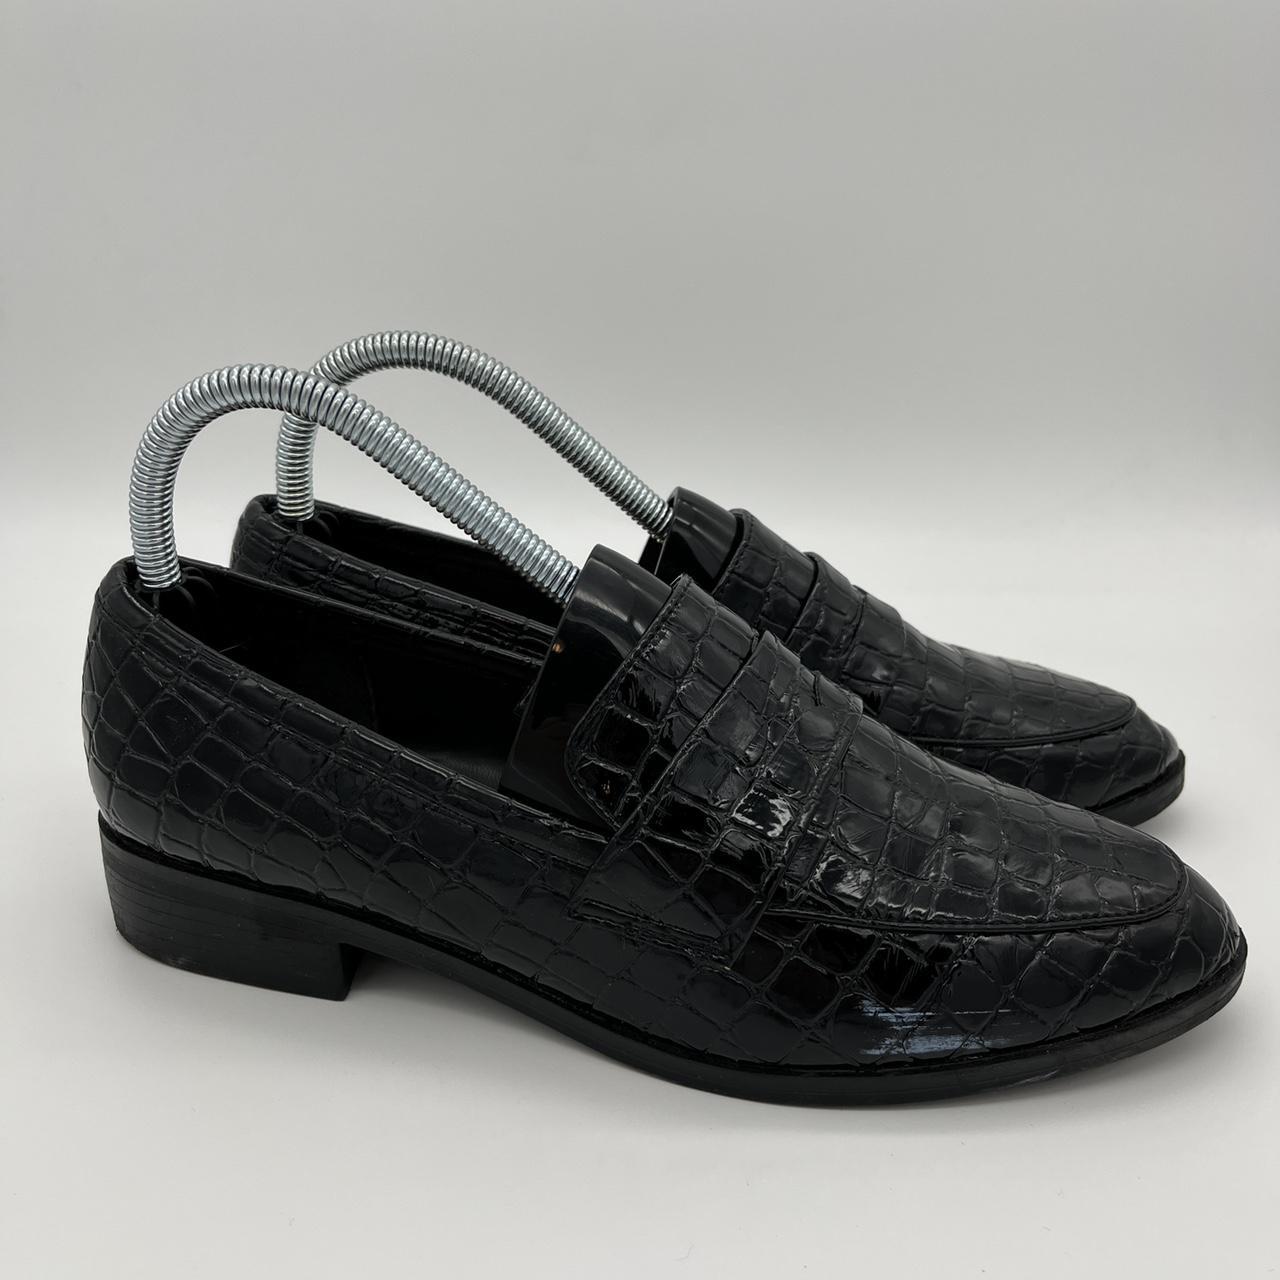 Product Image 1 - Black Loafers

•Women’s ALDO Black Reptile